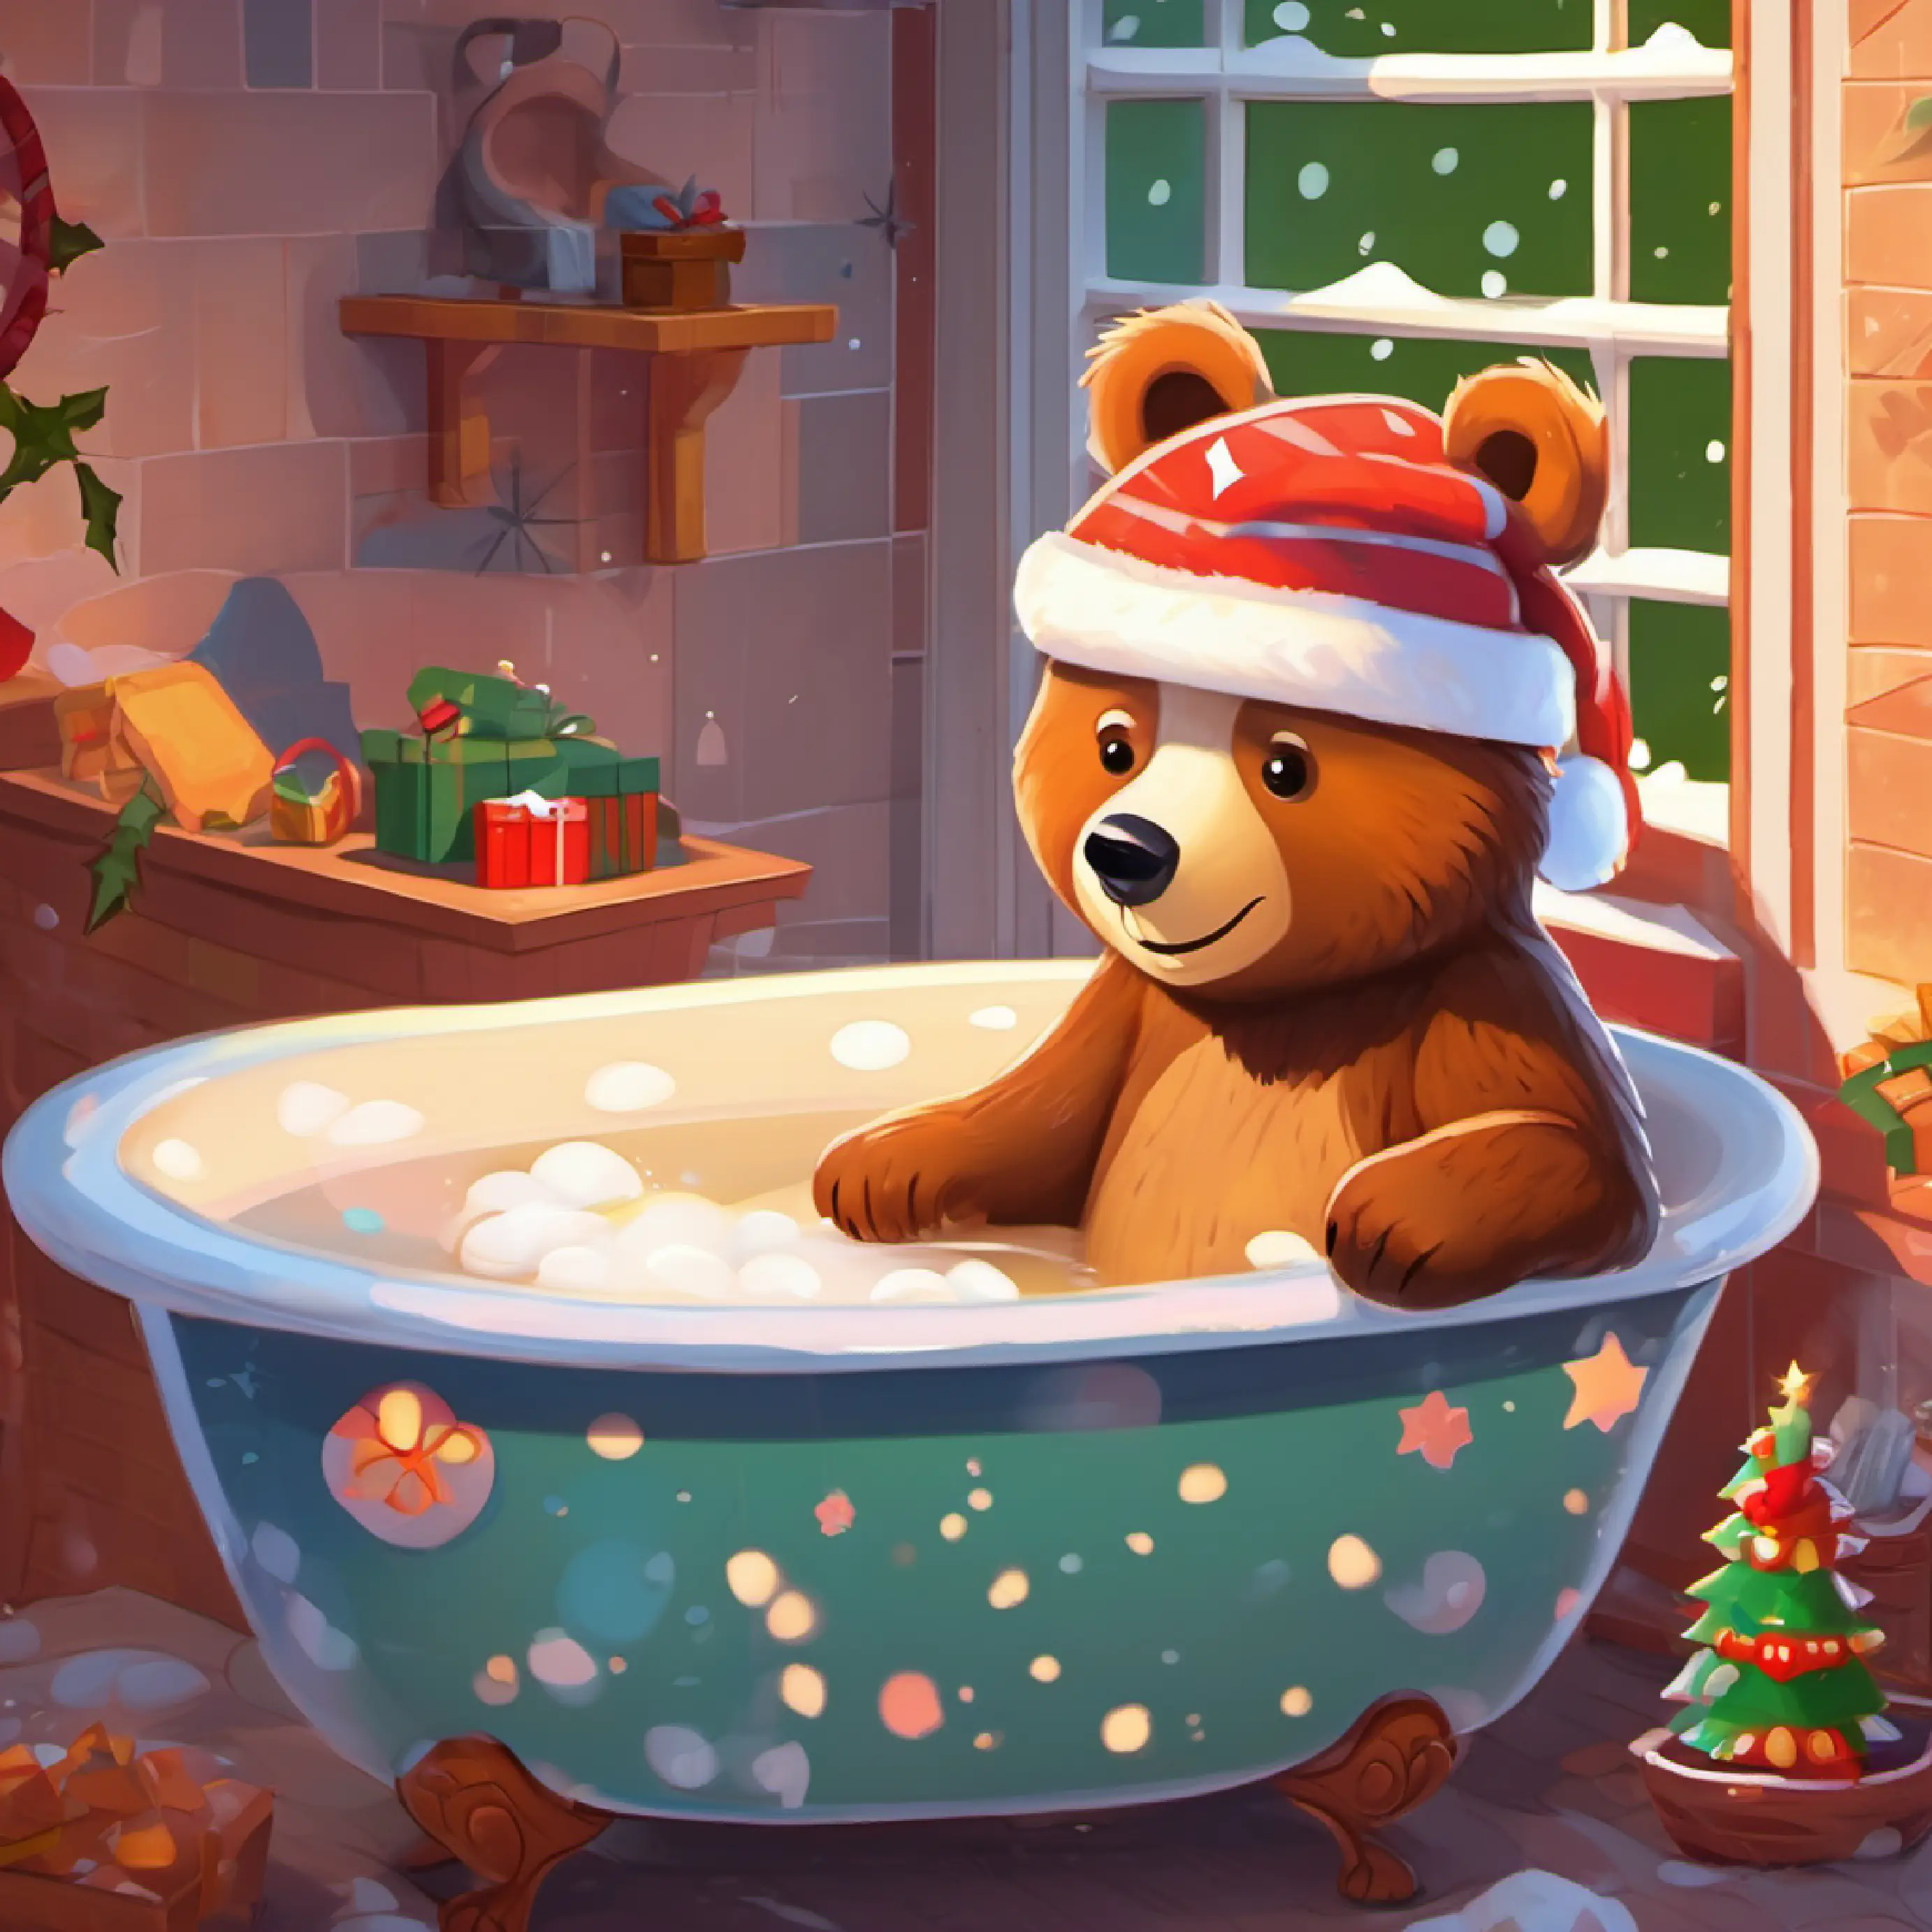 Snoody the bear wakes in the bathtub , feeling happy.